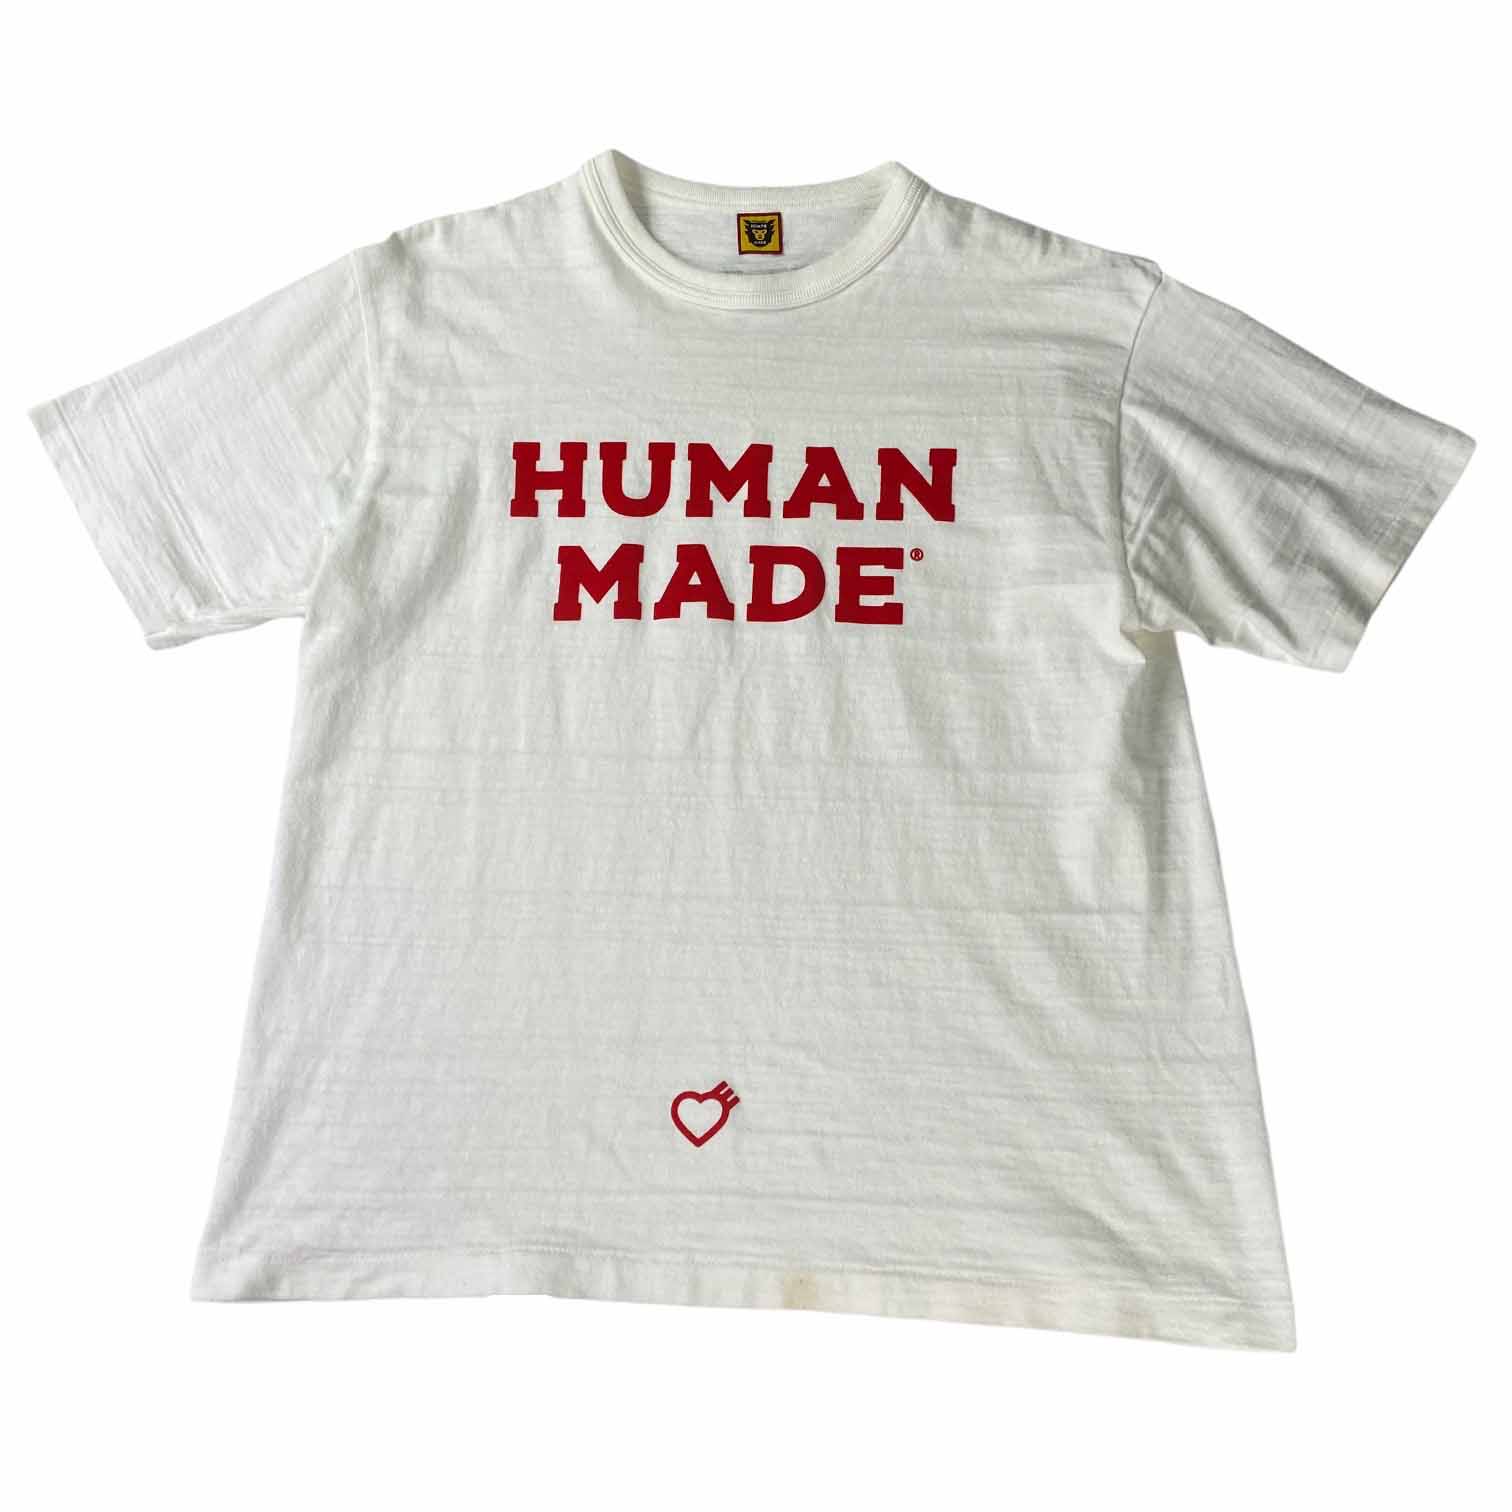 [Human Made] Red Print Logo Short Tshirt - Size XL